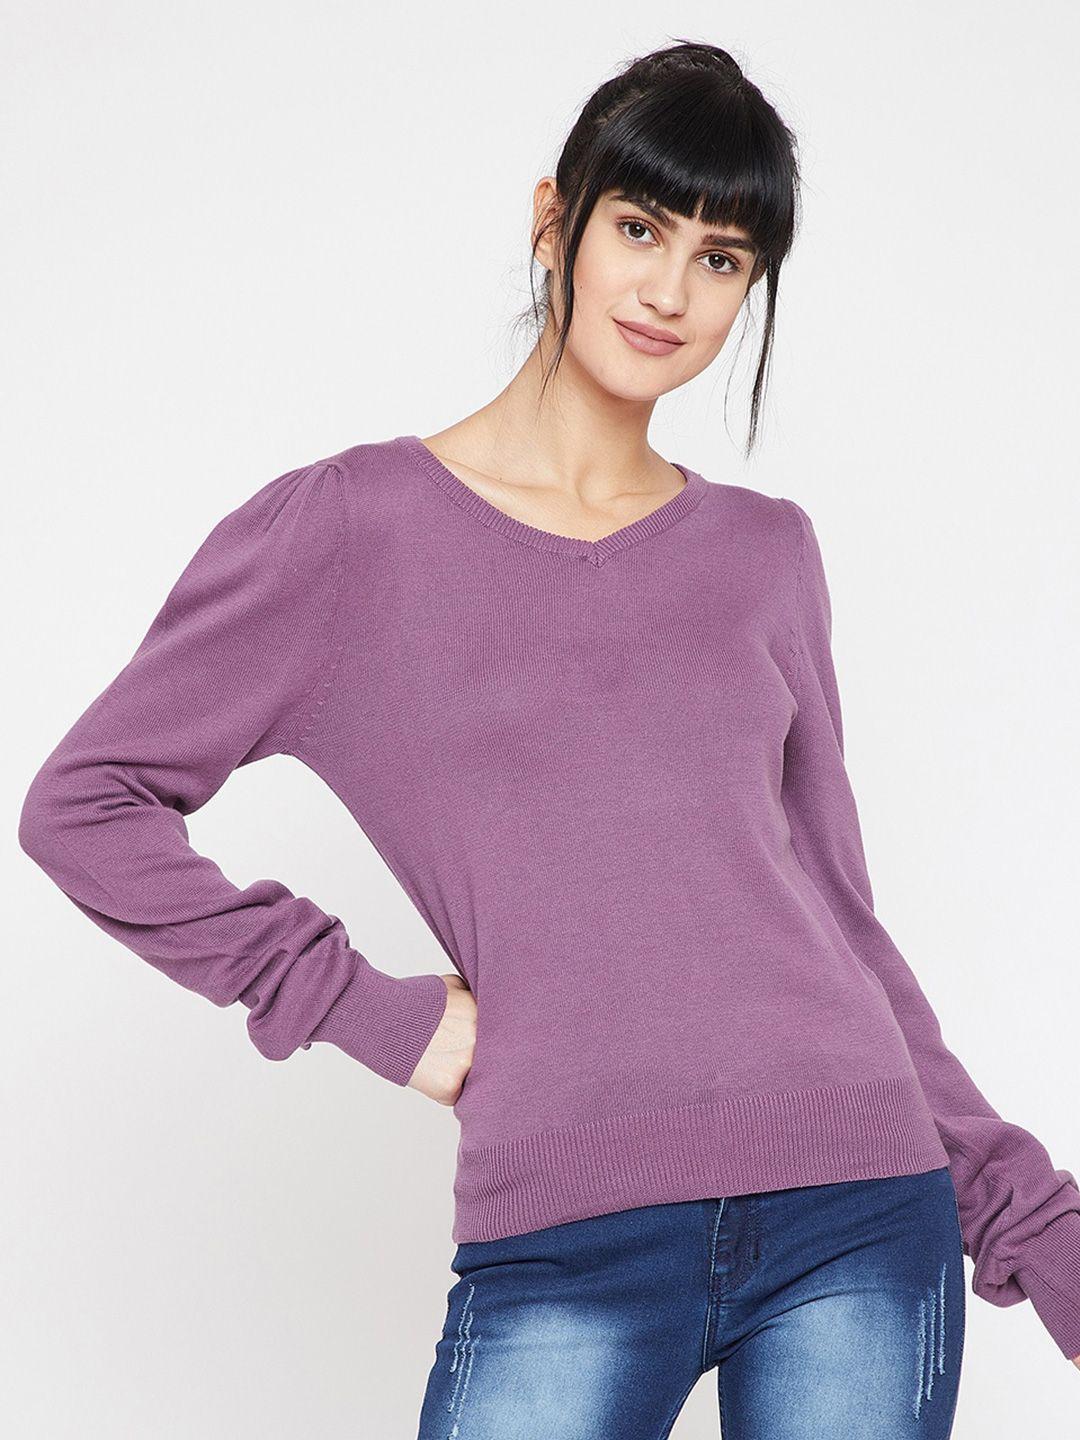 carlton-london-women-pullover